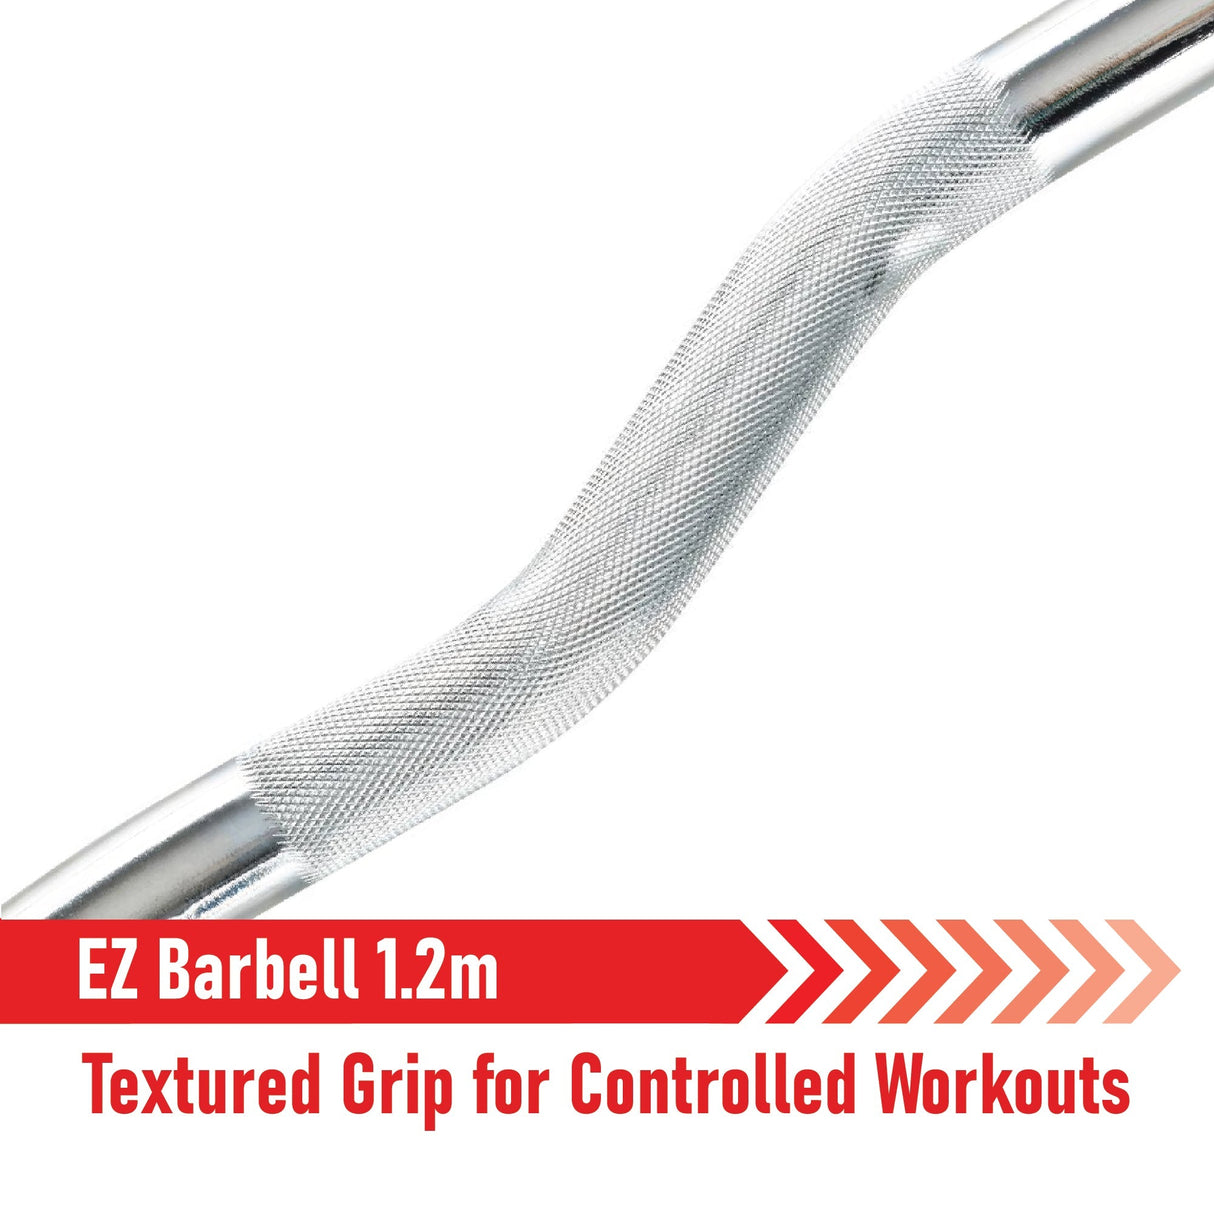 Body Revolution EZ Barbell Bar - 1.2m - Body Revolution